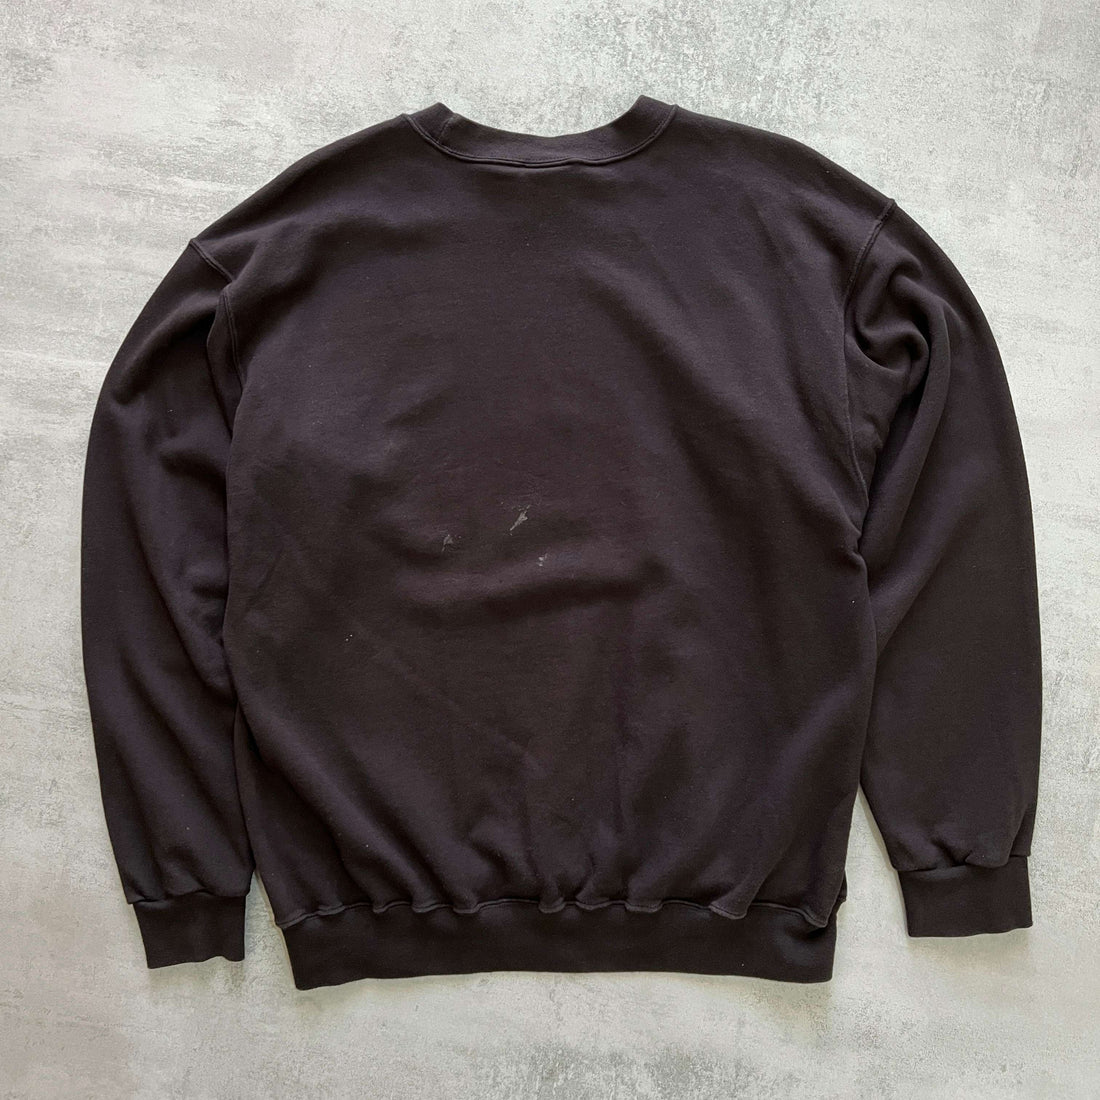 Nike RARE 1990s heavyweight embroidered sweatshirt (S)